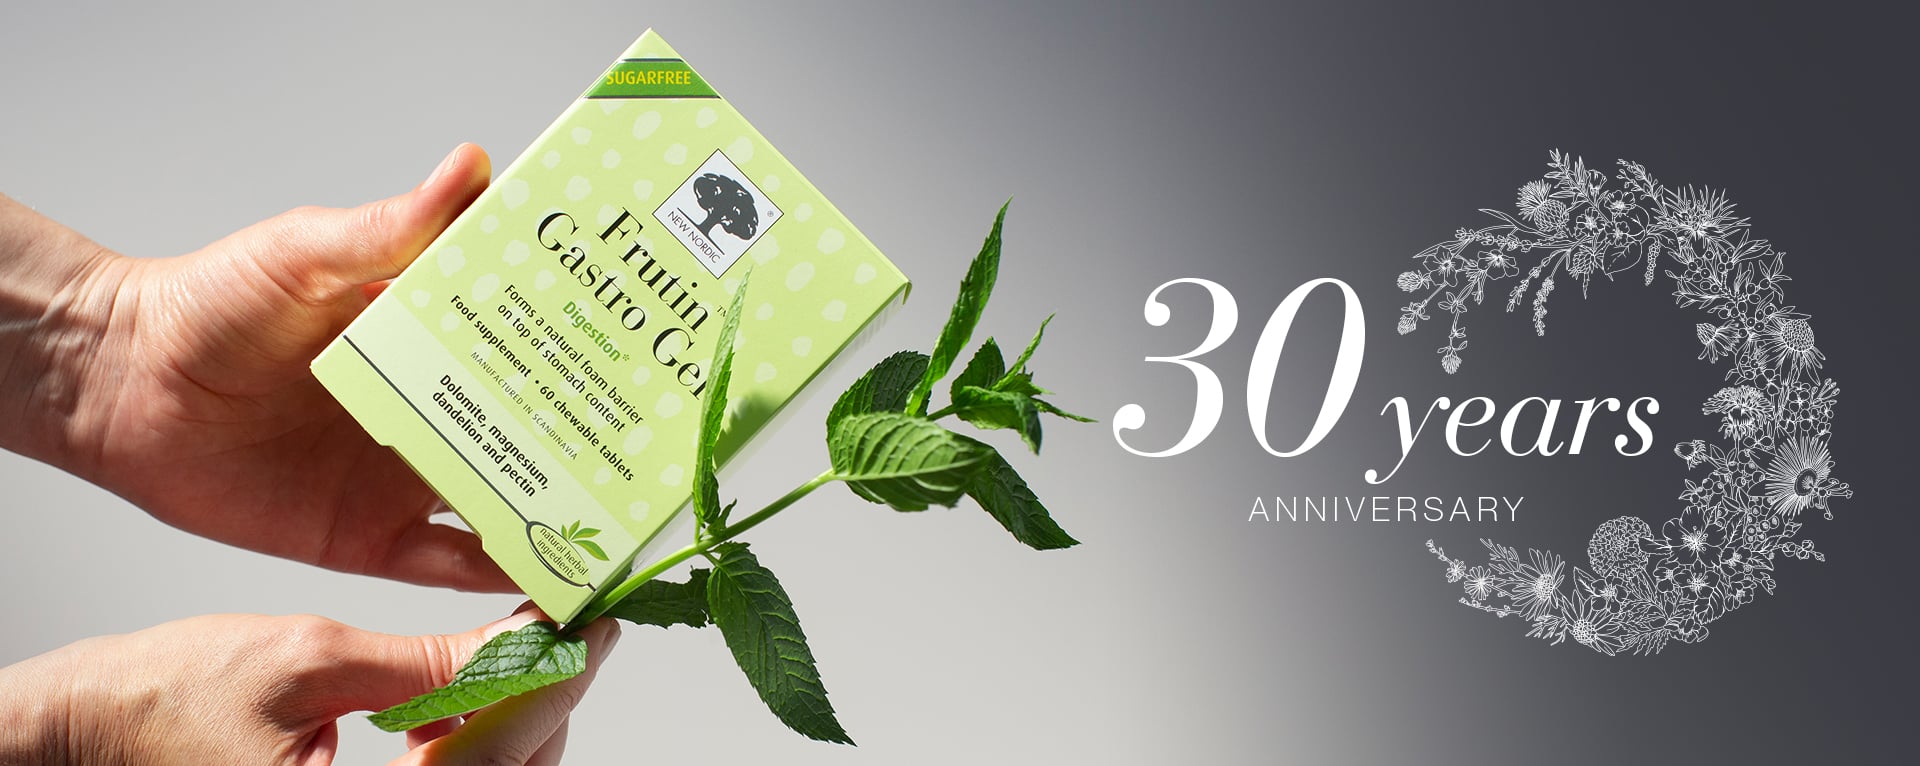 Frutin Celebrates 30 years on the shelves